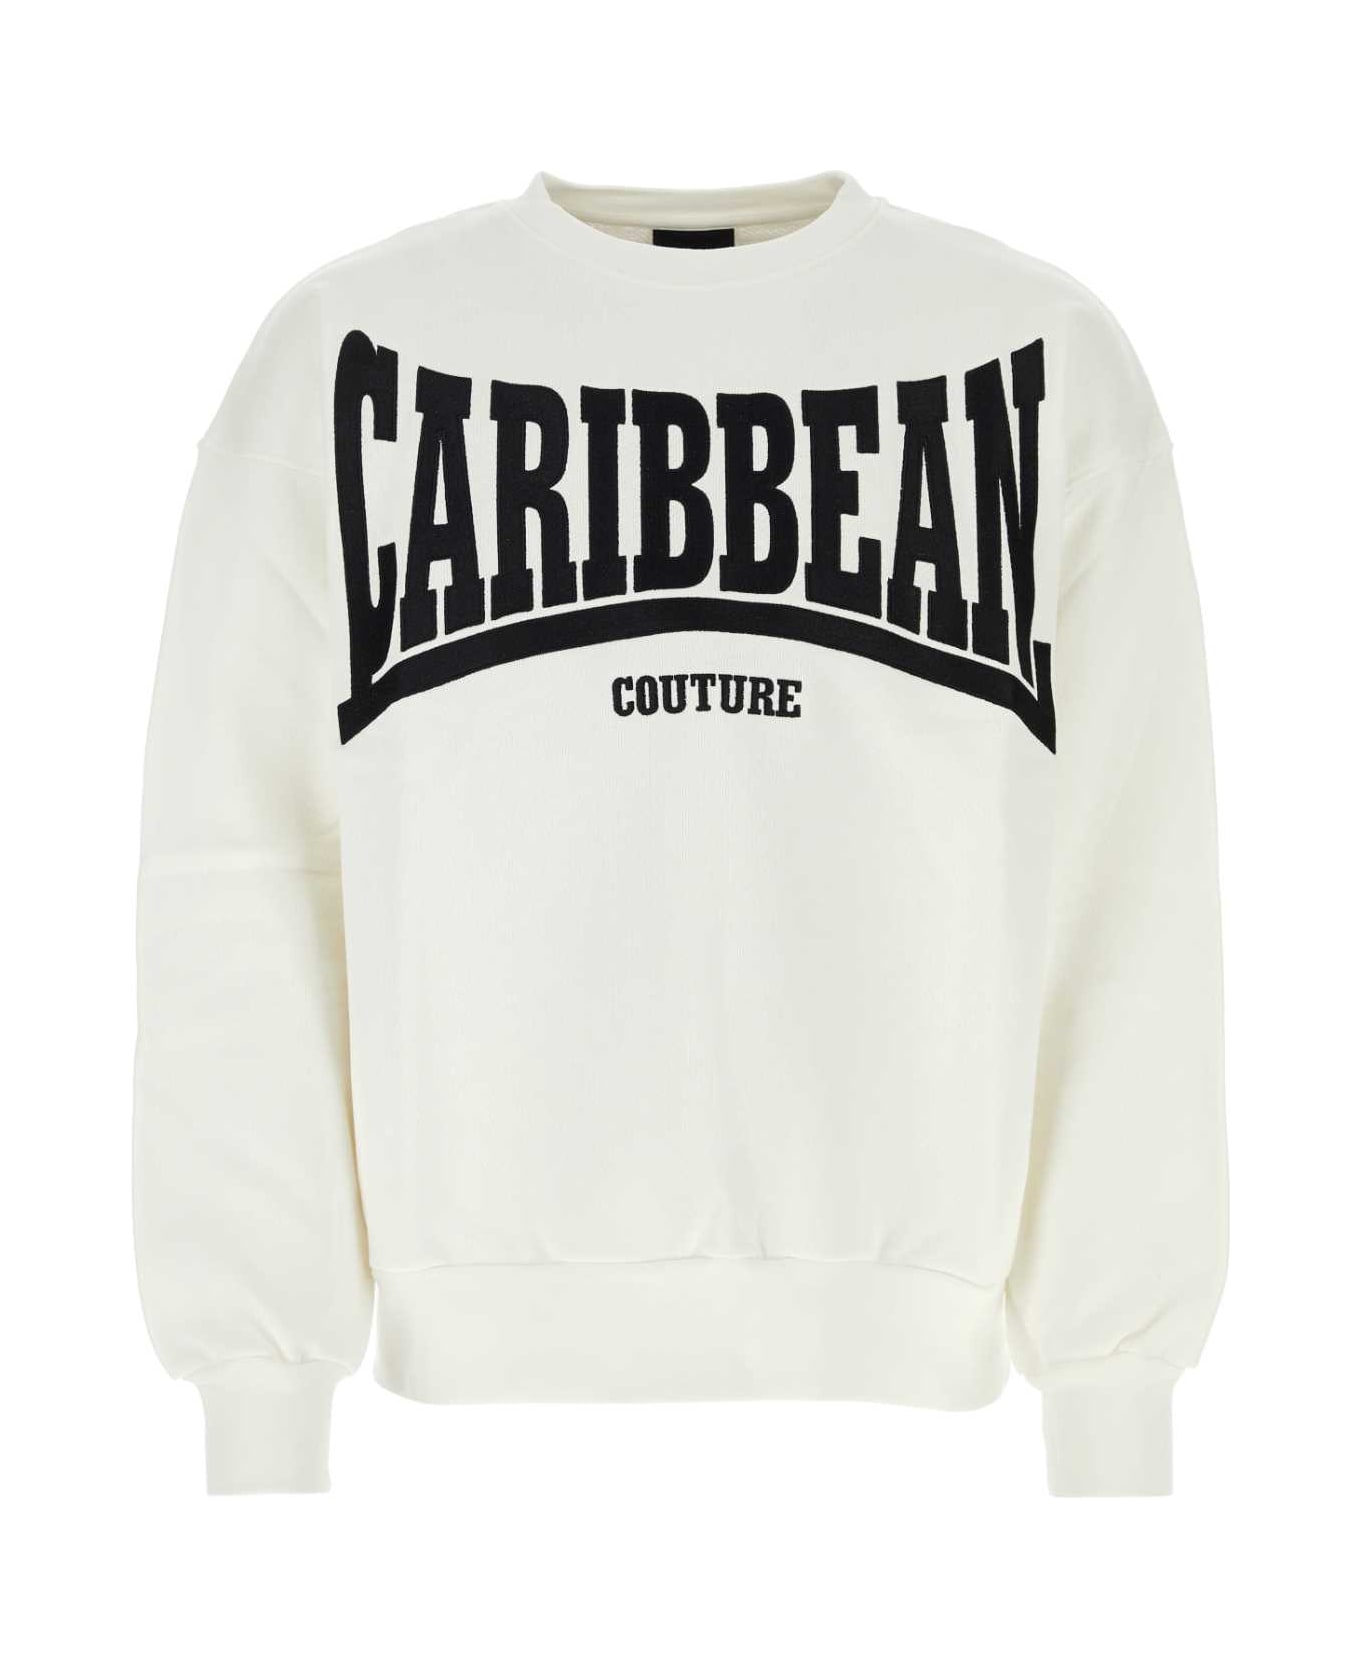 Botter White Cotton Sweatshirt - WHITE CARIBBEAN COUTURE EMBR